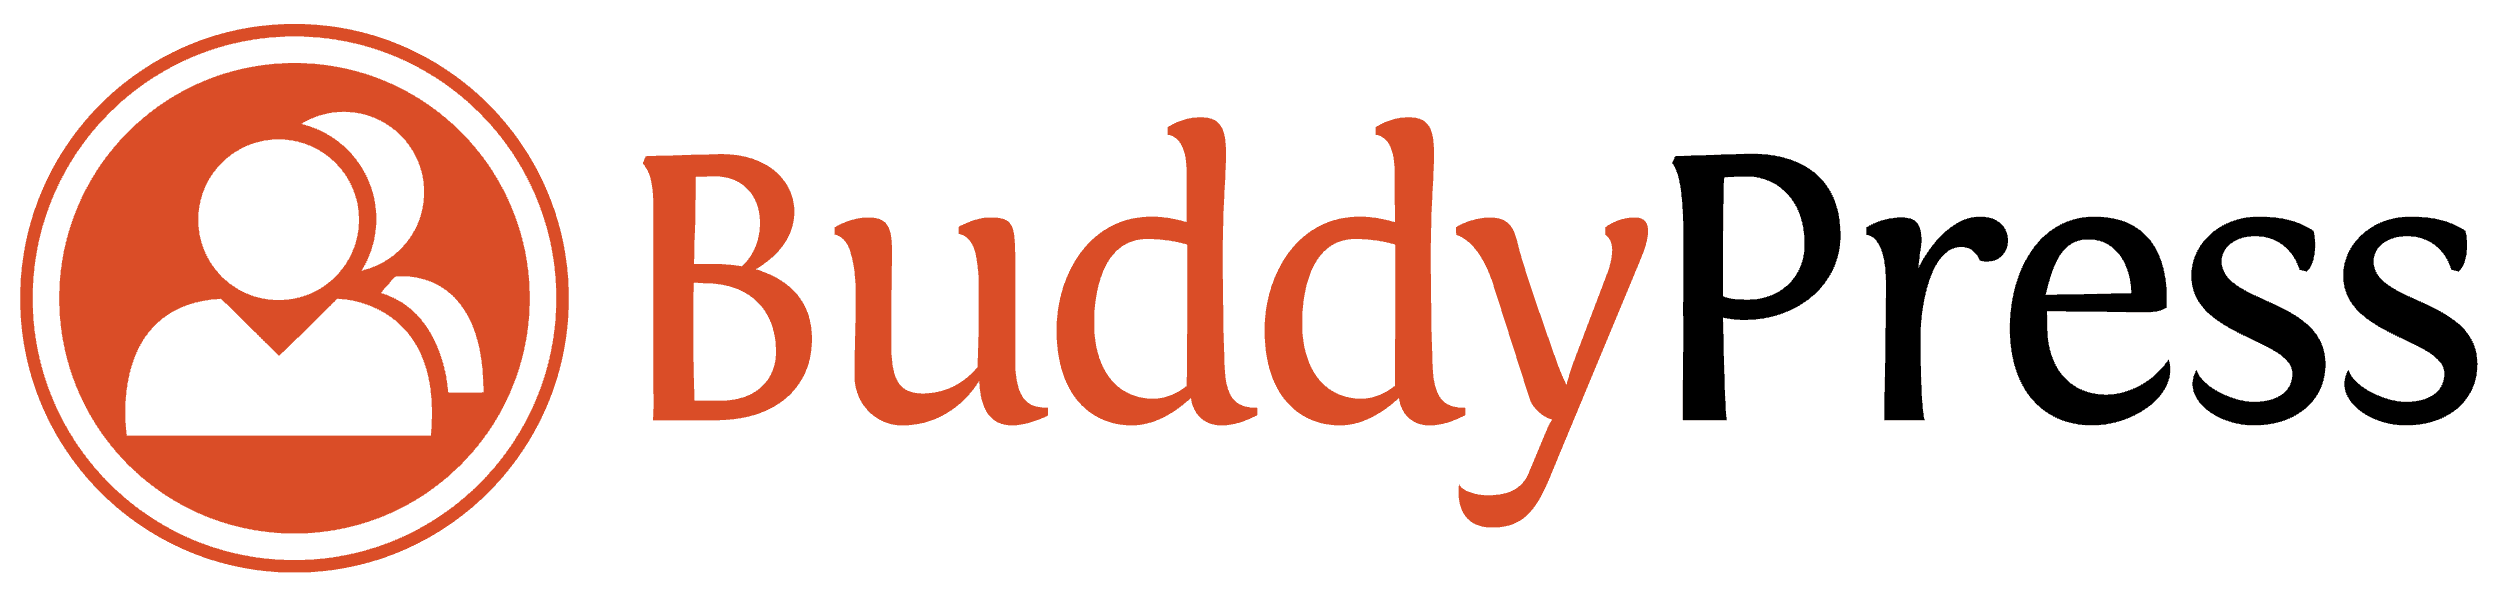 BuddyPress - Socialt netværk til Wordpress